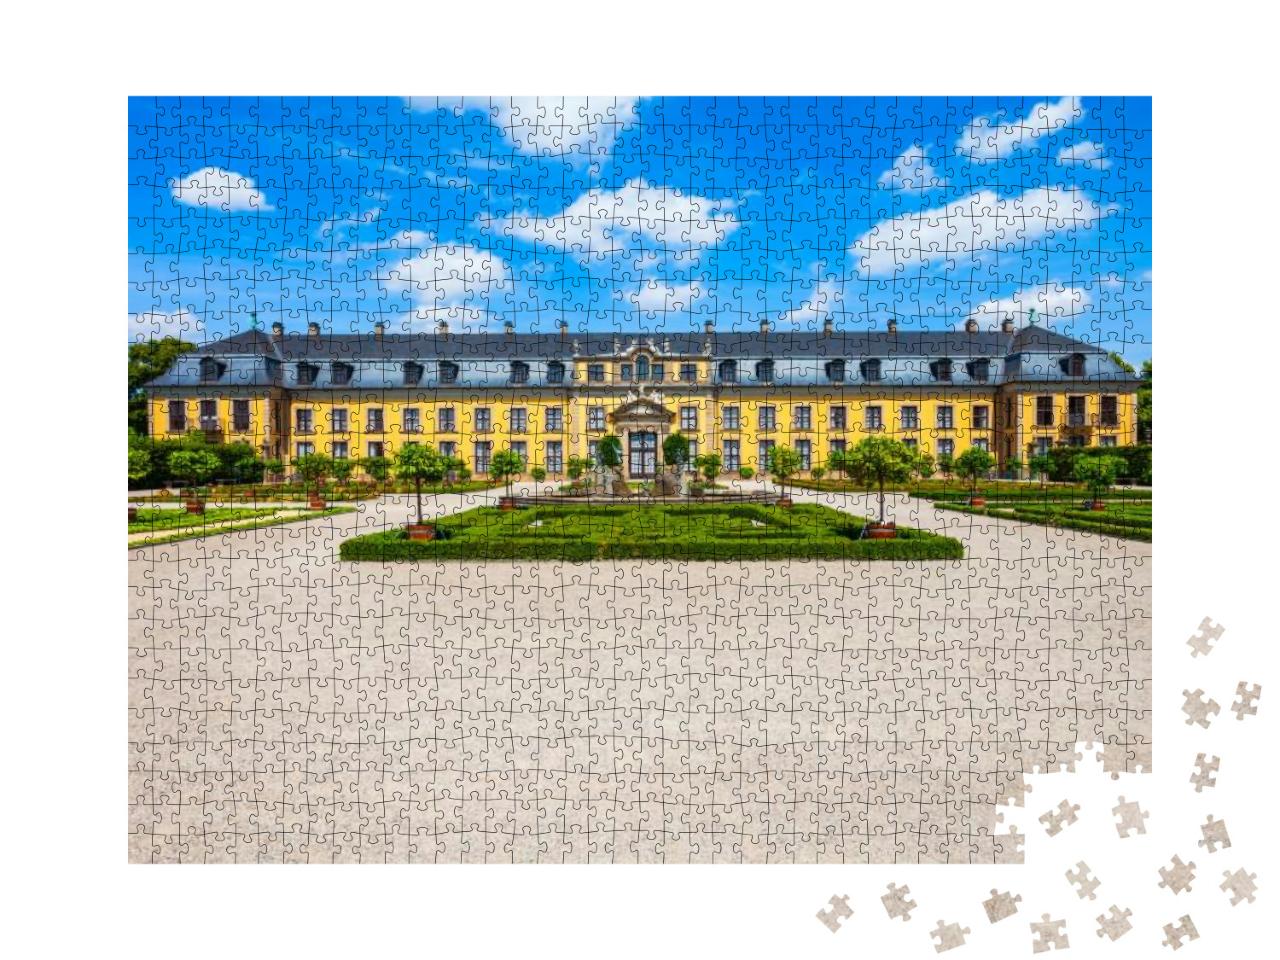 Herrenhausen Gallery Located in Herrenhausen Gardens in H... Jigsaw Puzzle with 1000 pieces